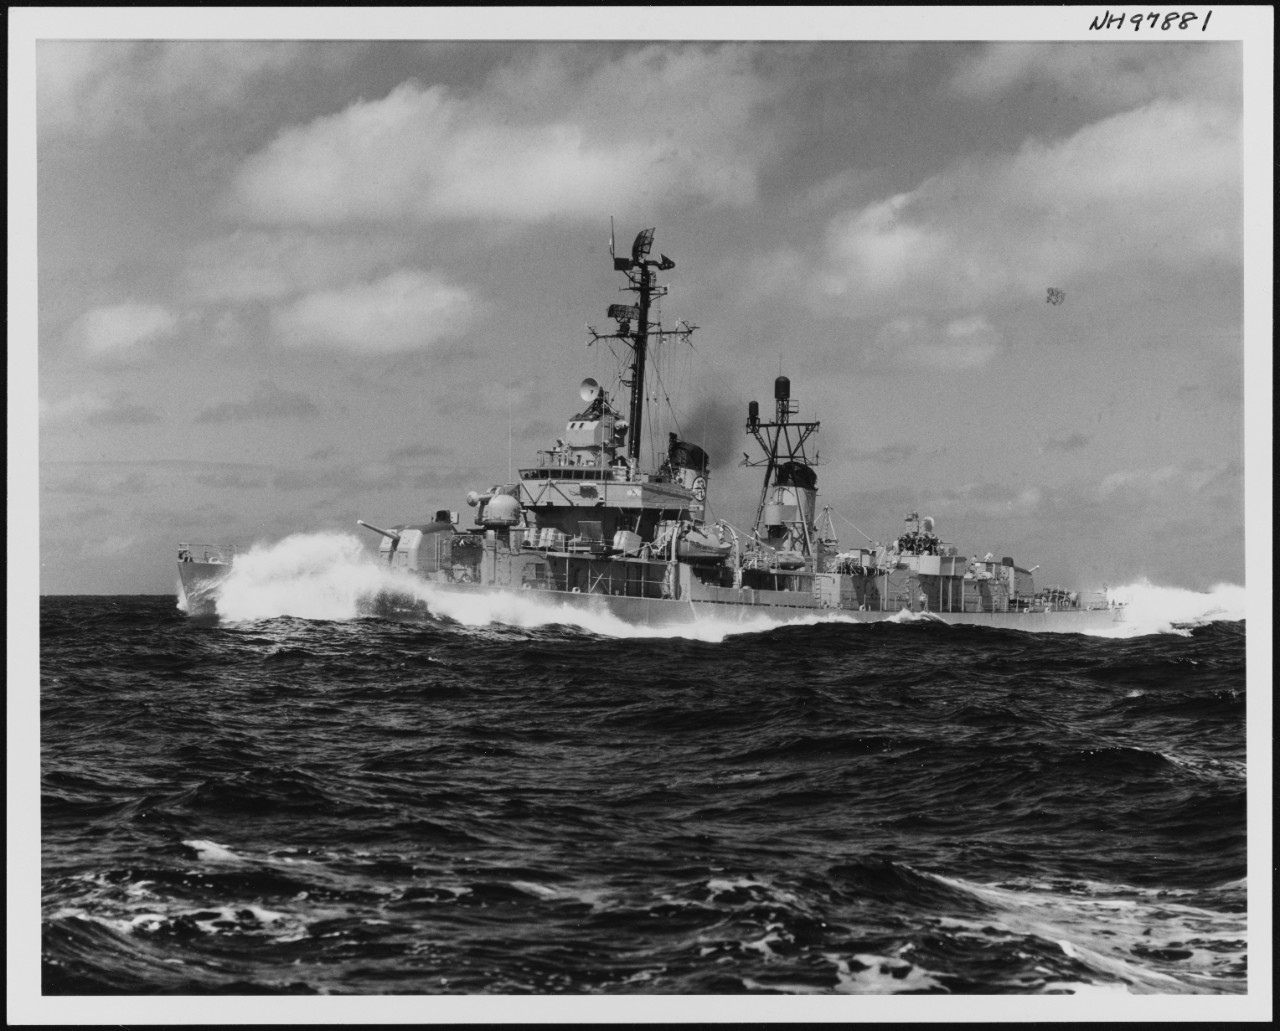 USS Fletcher (DD-445/DDE-445)